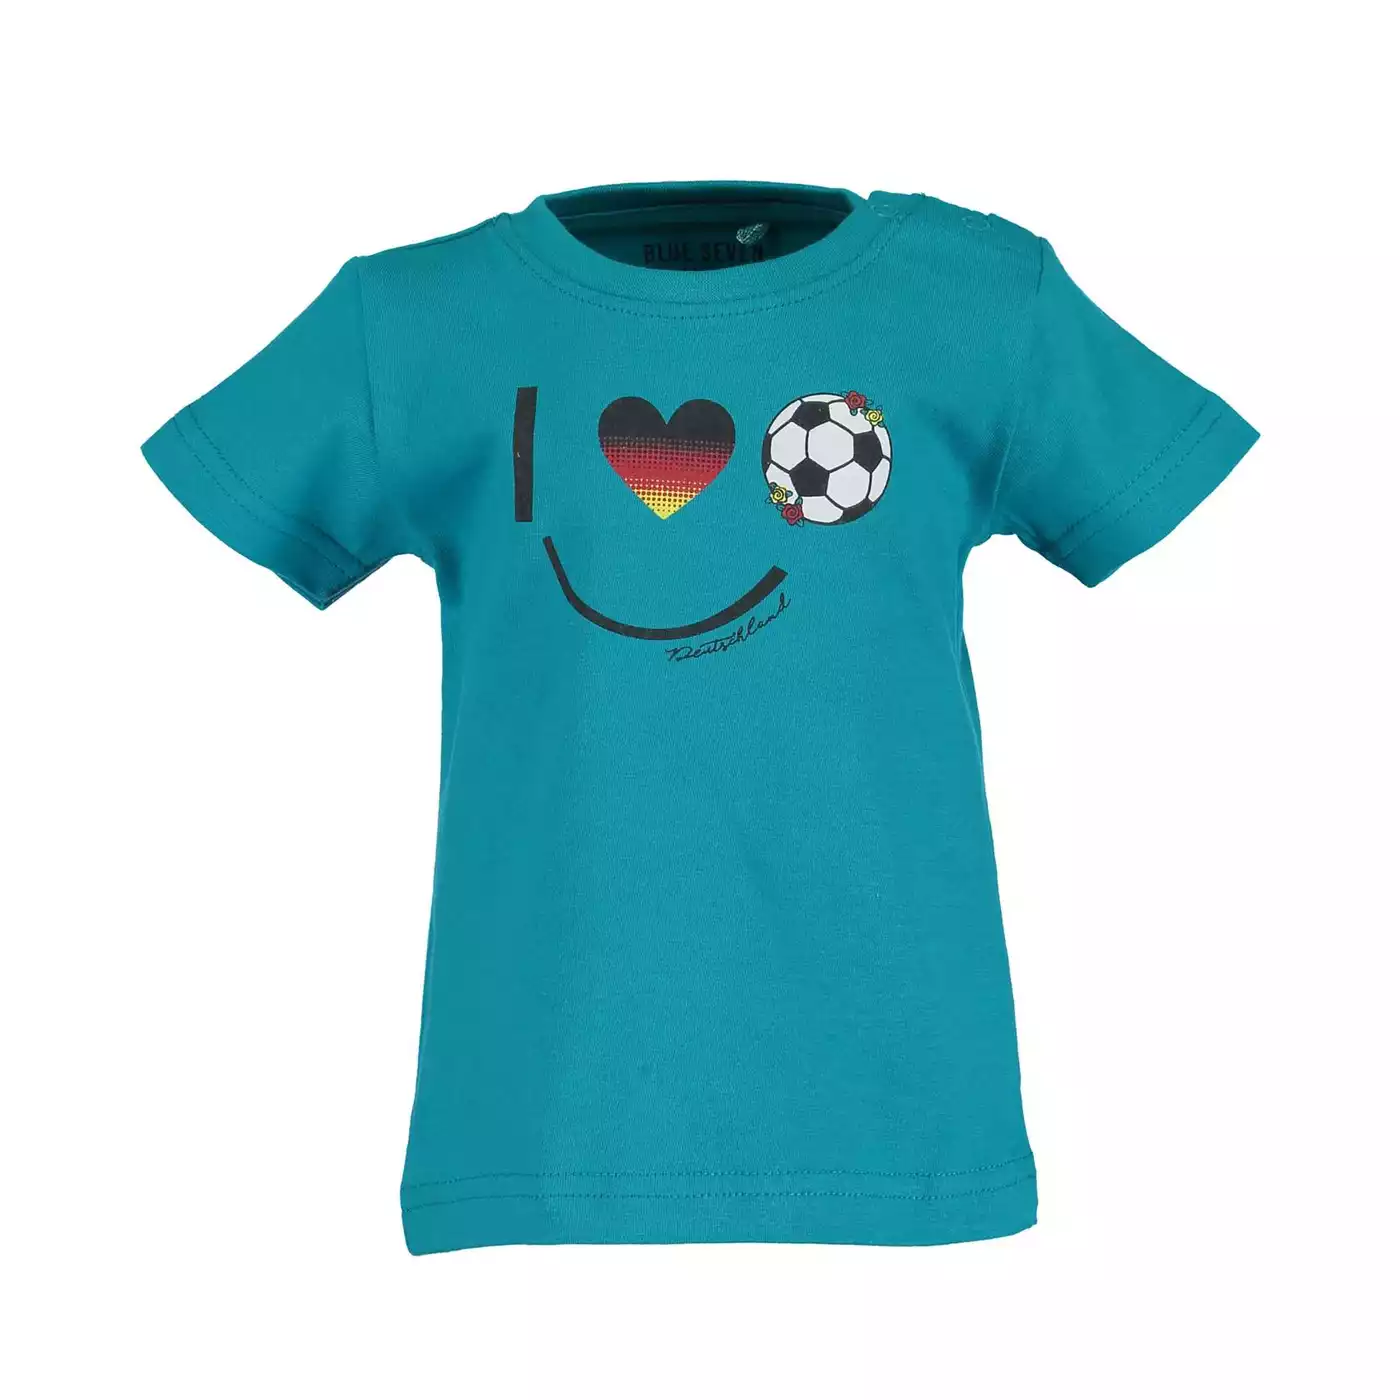 T-Shirt Fußball blue seven Türkis Grün Blau M2008578435505 1